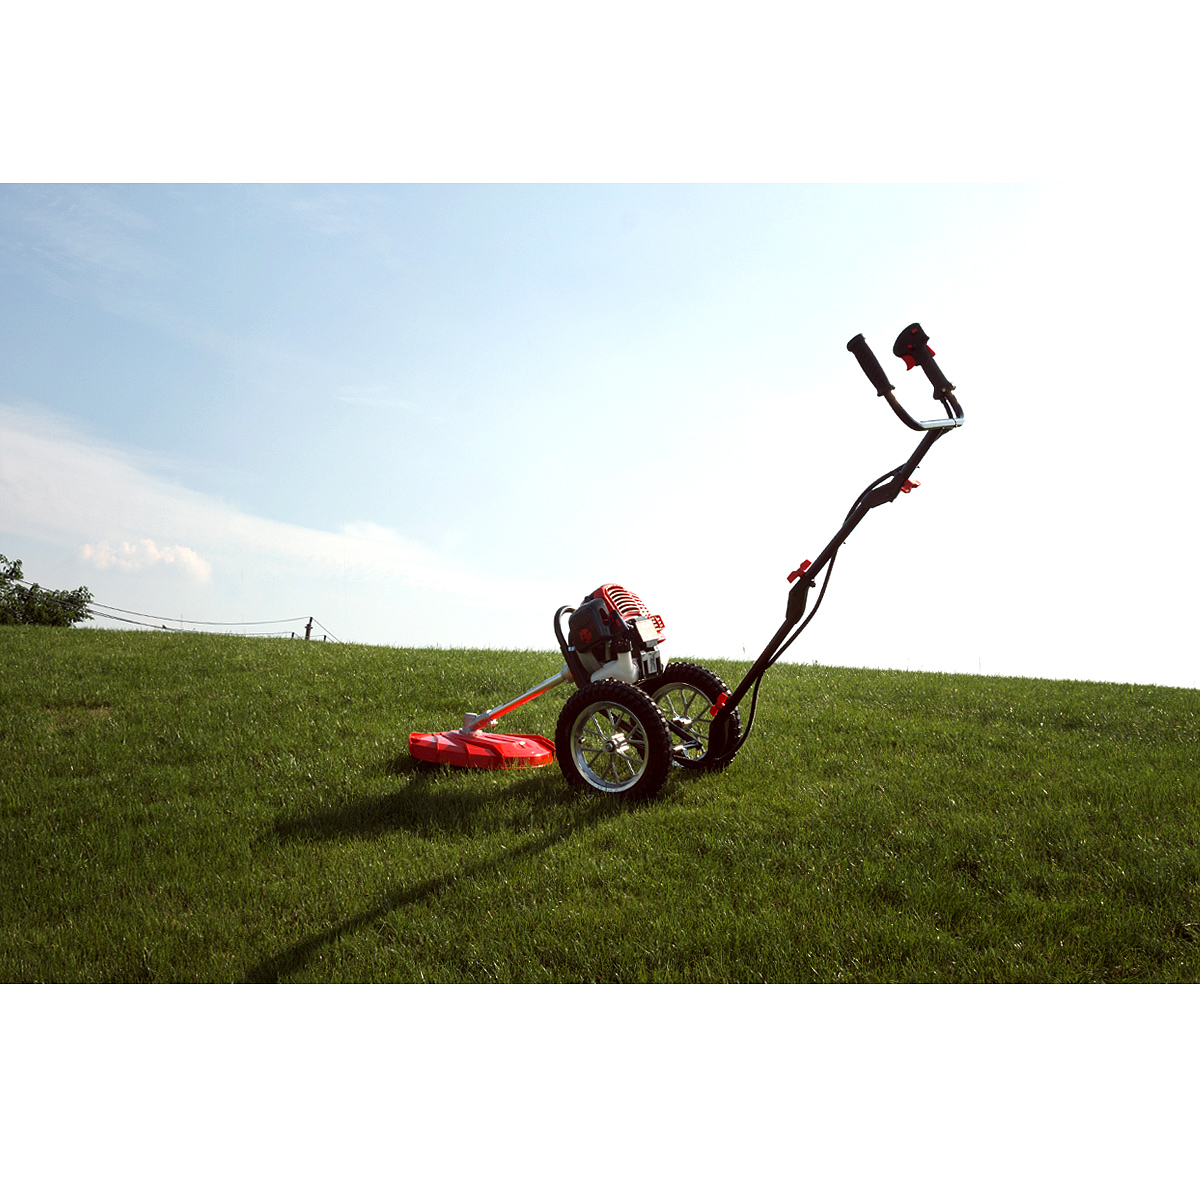 AOSOME 52cc 2-Stroke Petrol Wheeled Push Garden Grass Trimmer/Strimmer